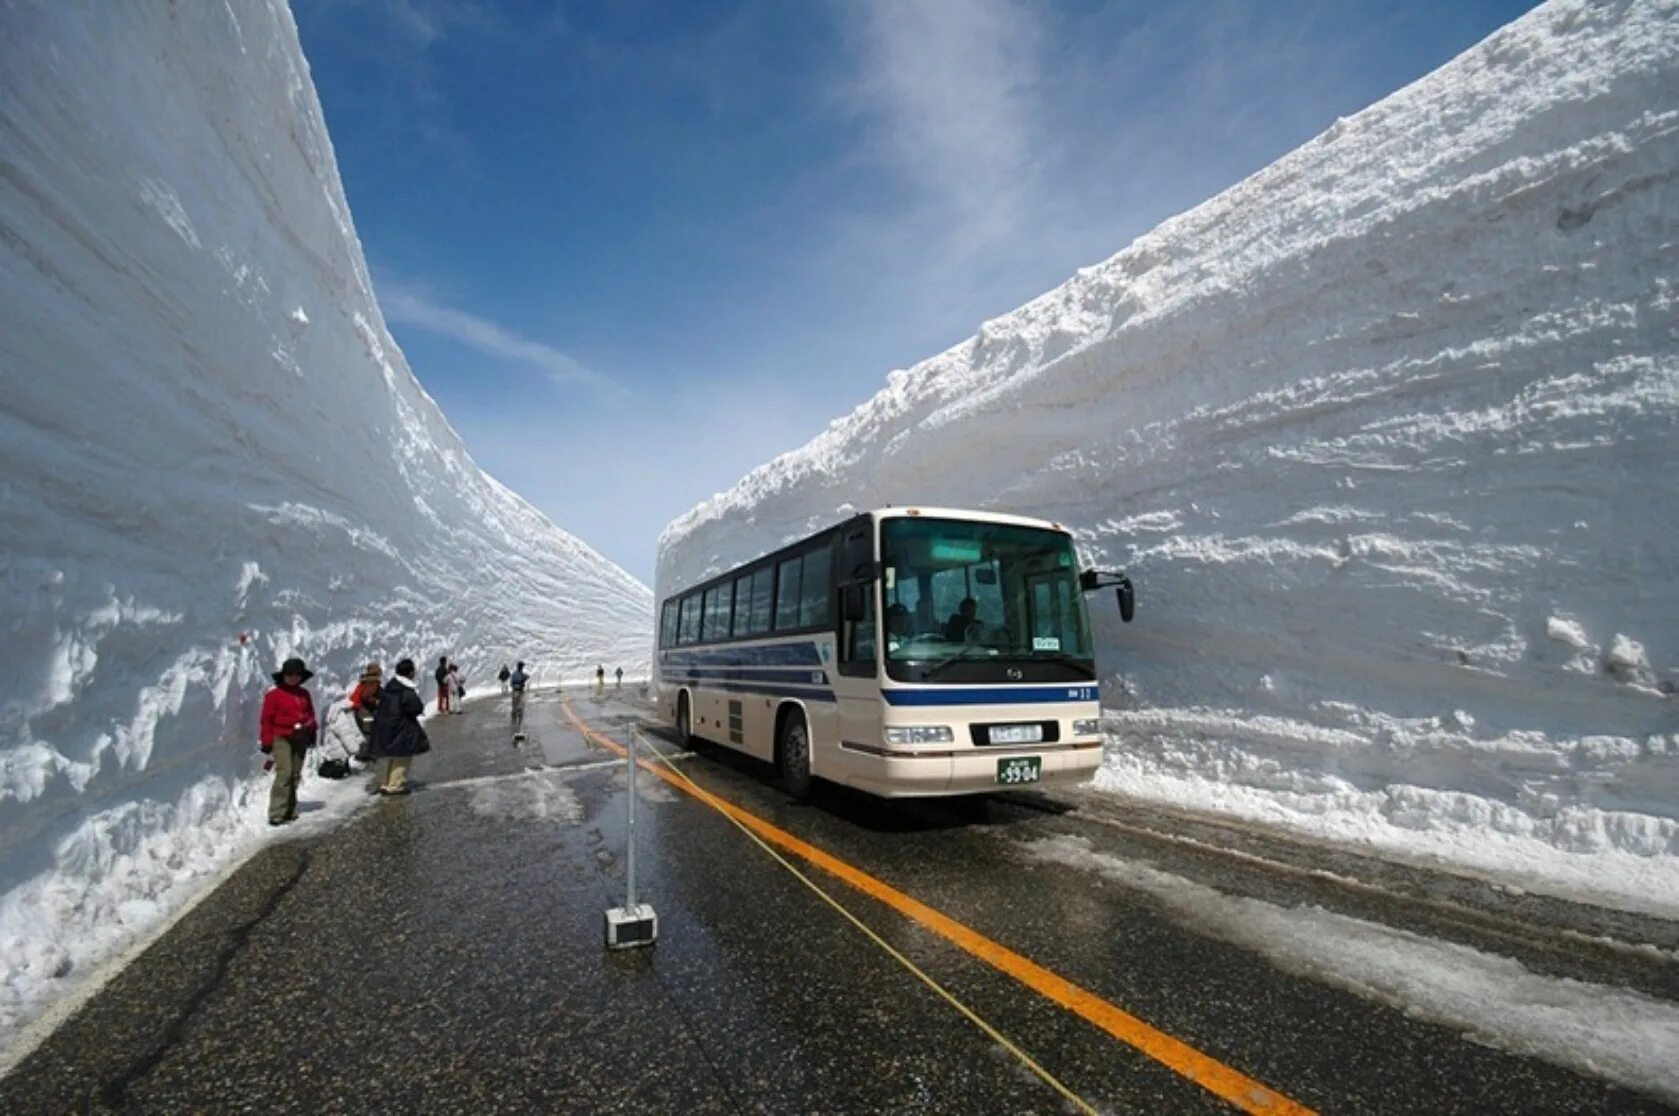 Автобус едет в горы. Татэяма Куробэ. Дорога Татэяма Куробэ, Япония. Tateyama Kurobe Alpine. Снежный коридор Татэяма Куробэ в Японии.